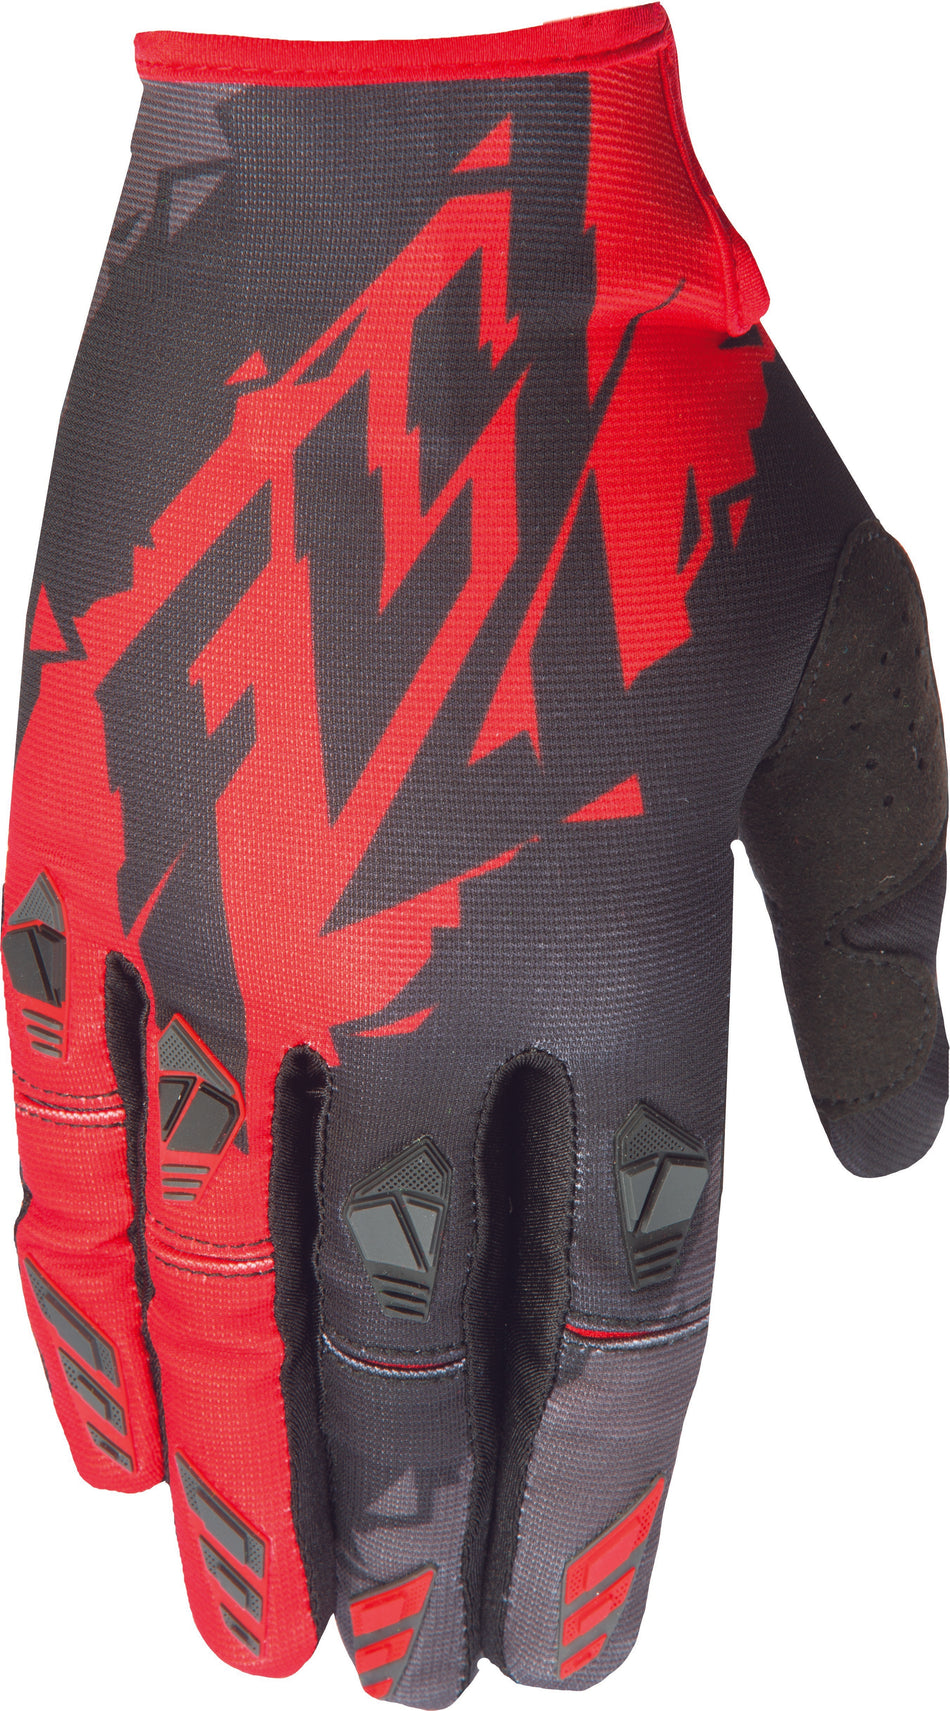 FLY RACING Kinetic Glove Black/Red Sz 7 Xs 370-41207